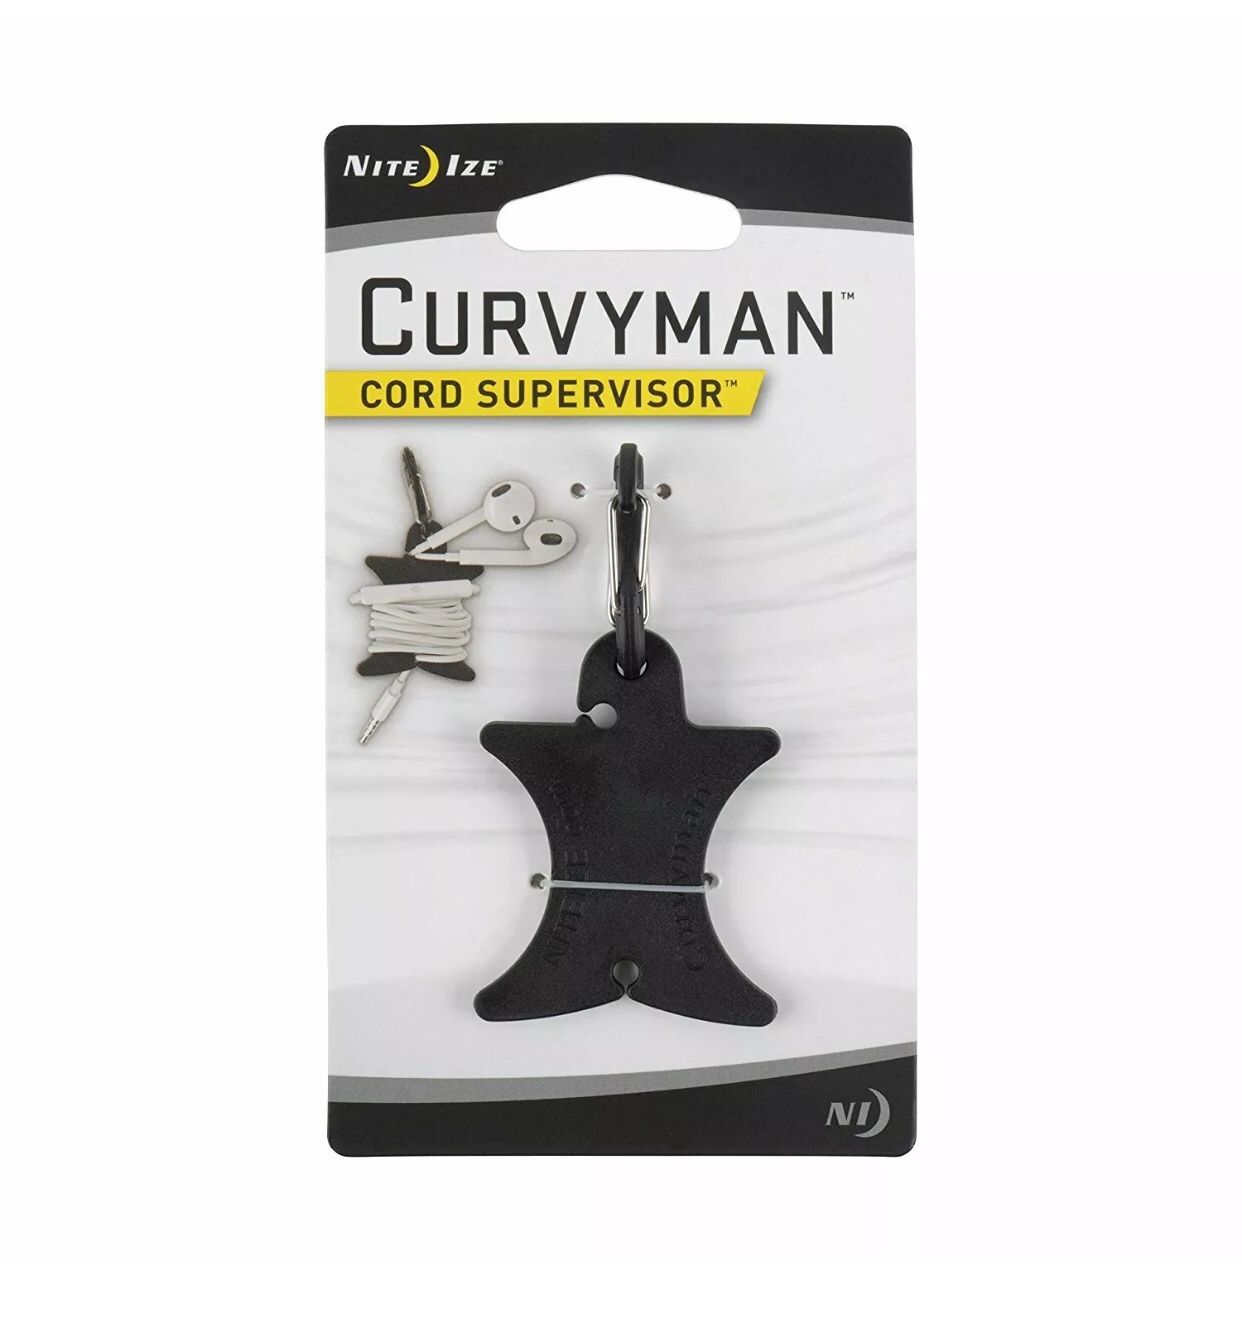 Nite Ize Curvyman Cord Supervisor - Easy Earbud Organizer, Headphone Cord Wrap / Brand New!!!